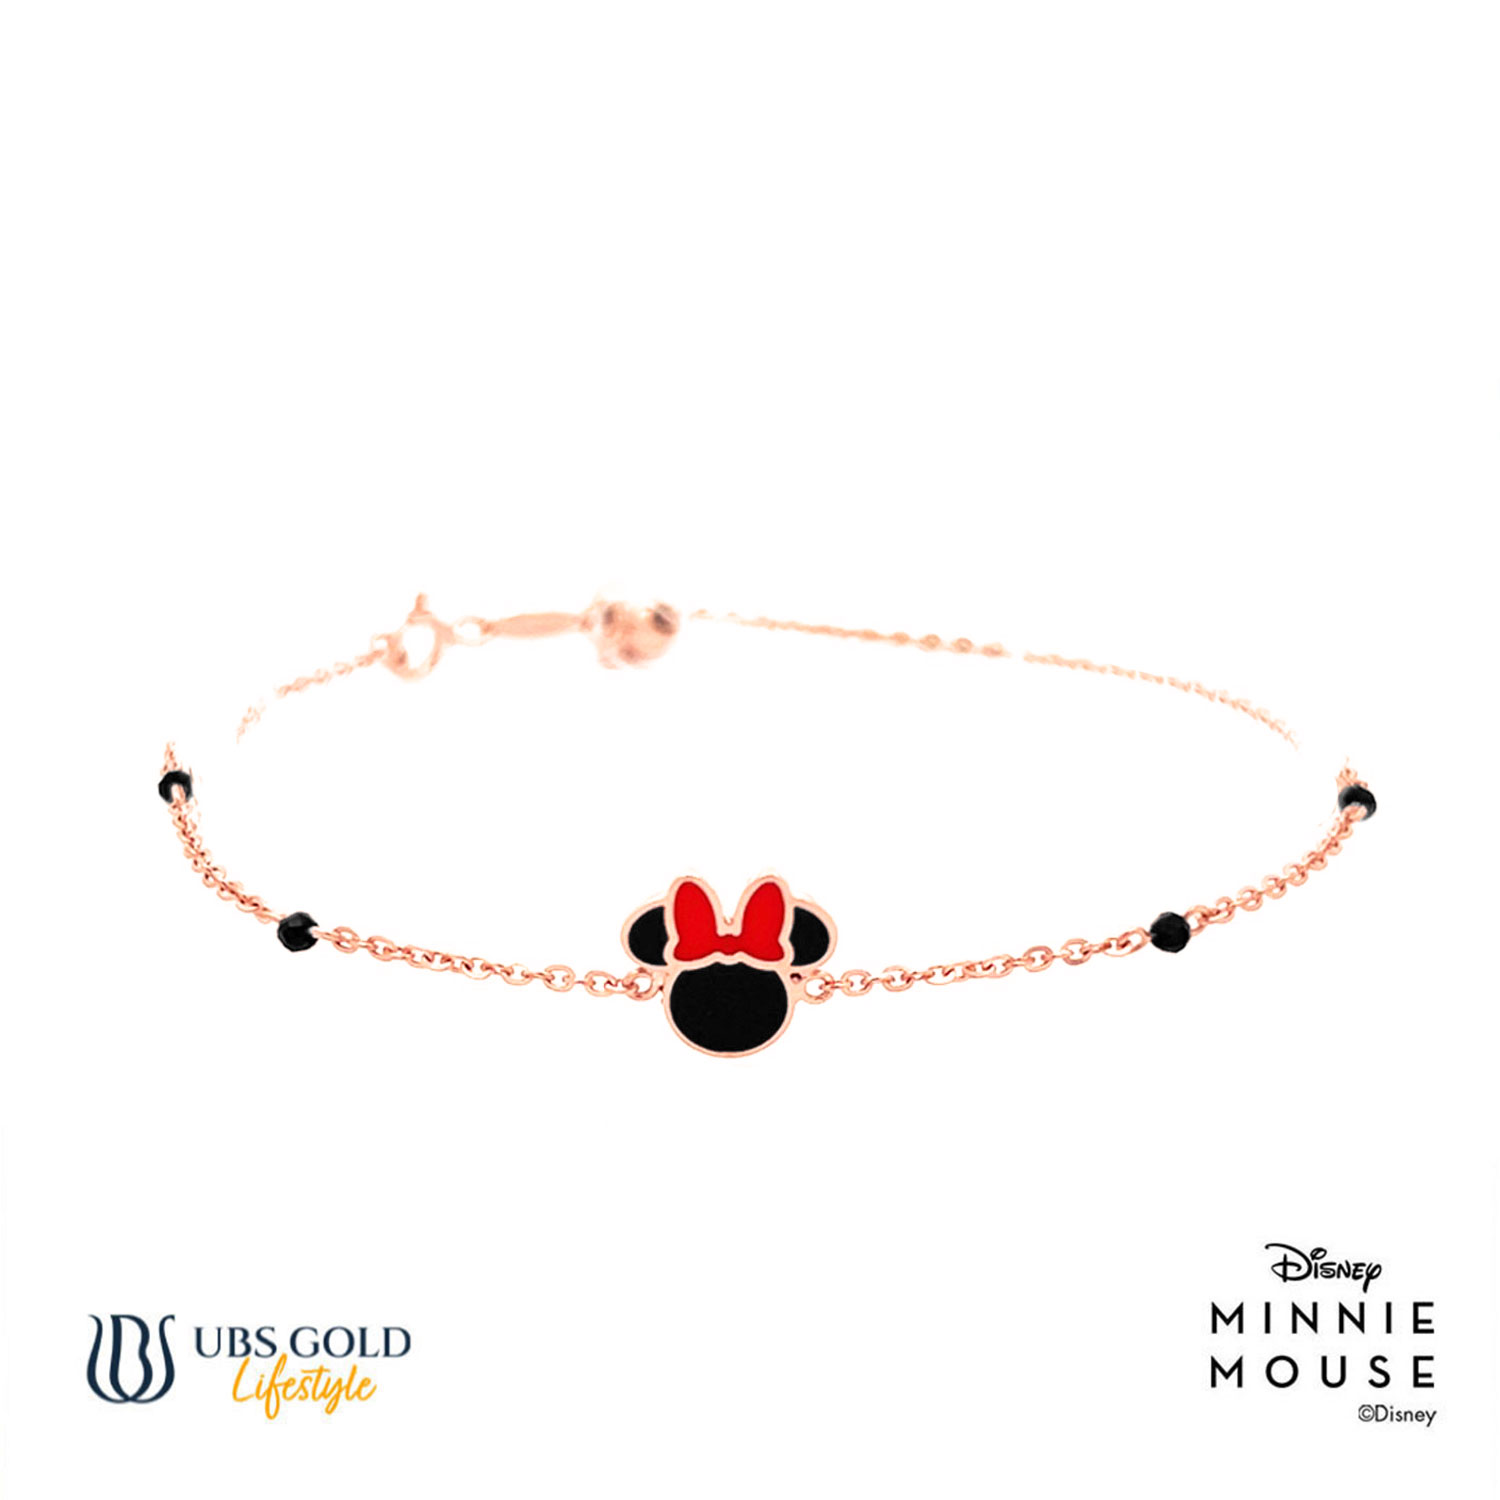 UBS Gold Gelang Emas Disney Minnie Mouse - Kgy0115 - 17K